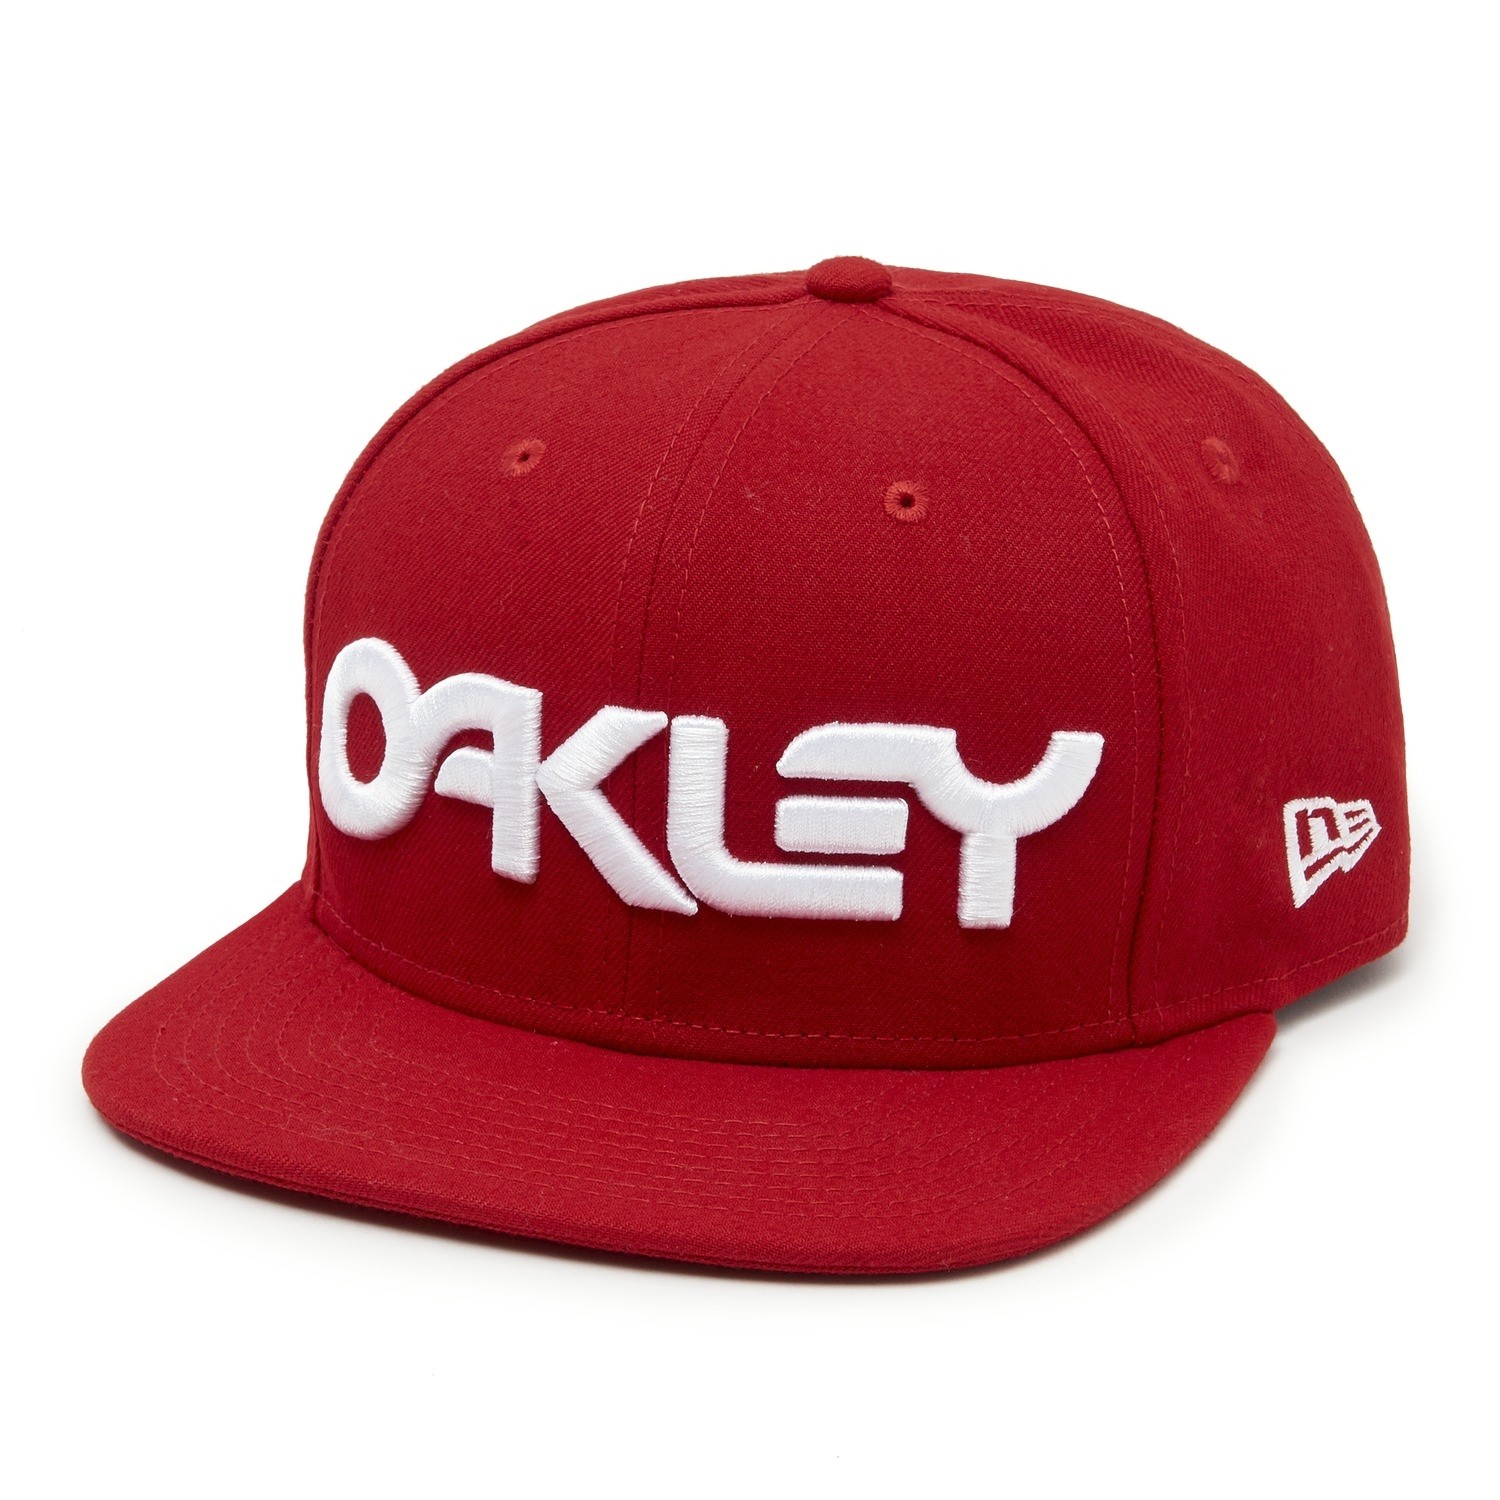 Oakley Mark II Novelty Snap Back - Red 